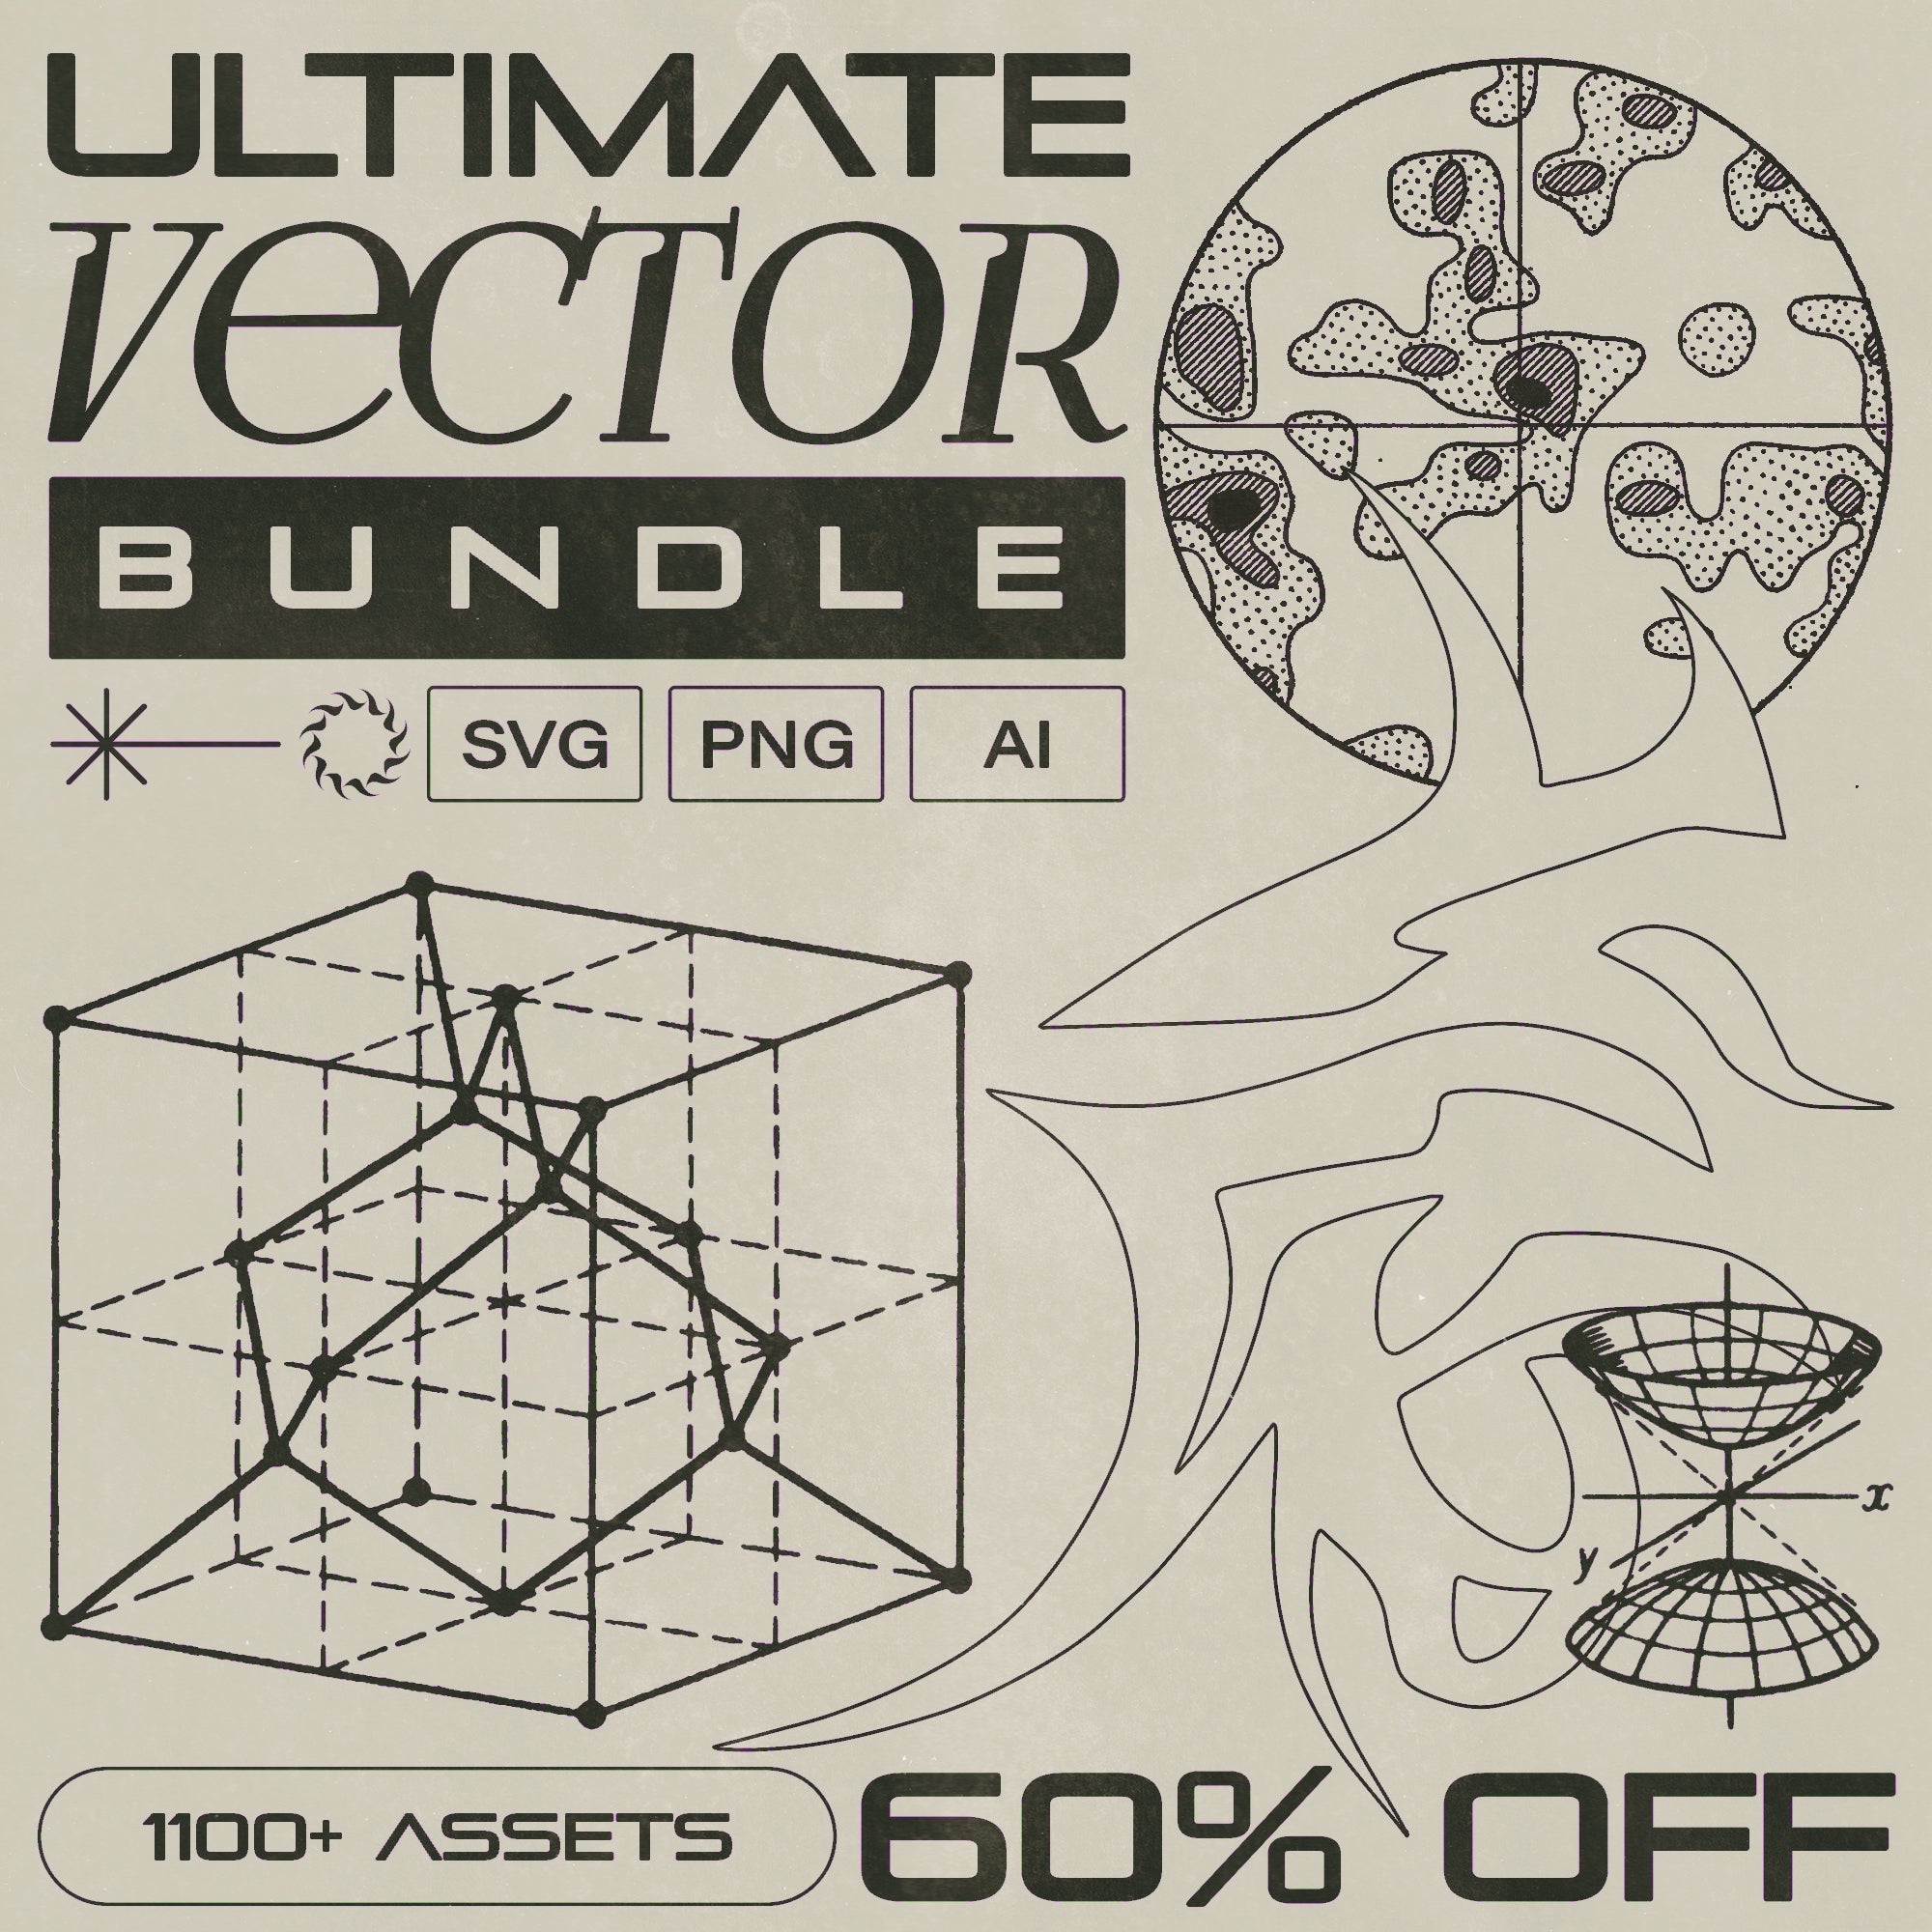 Ultimate Vector Bundle